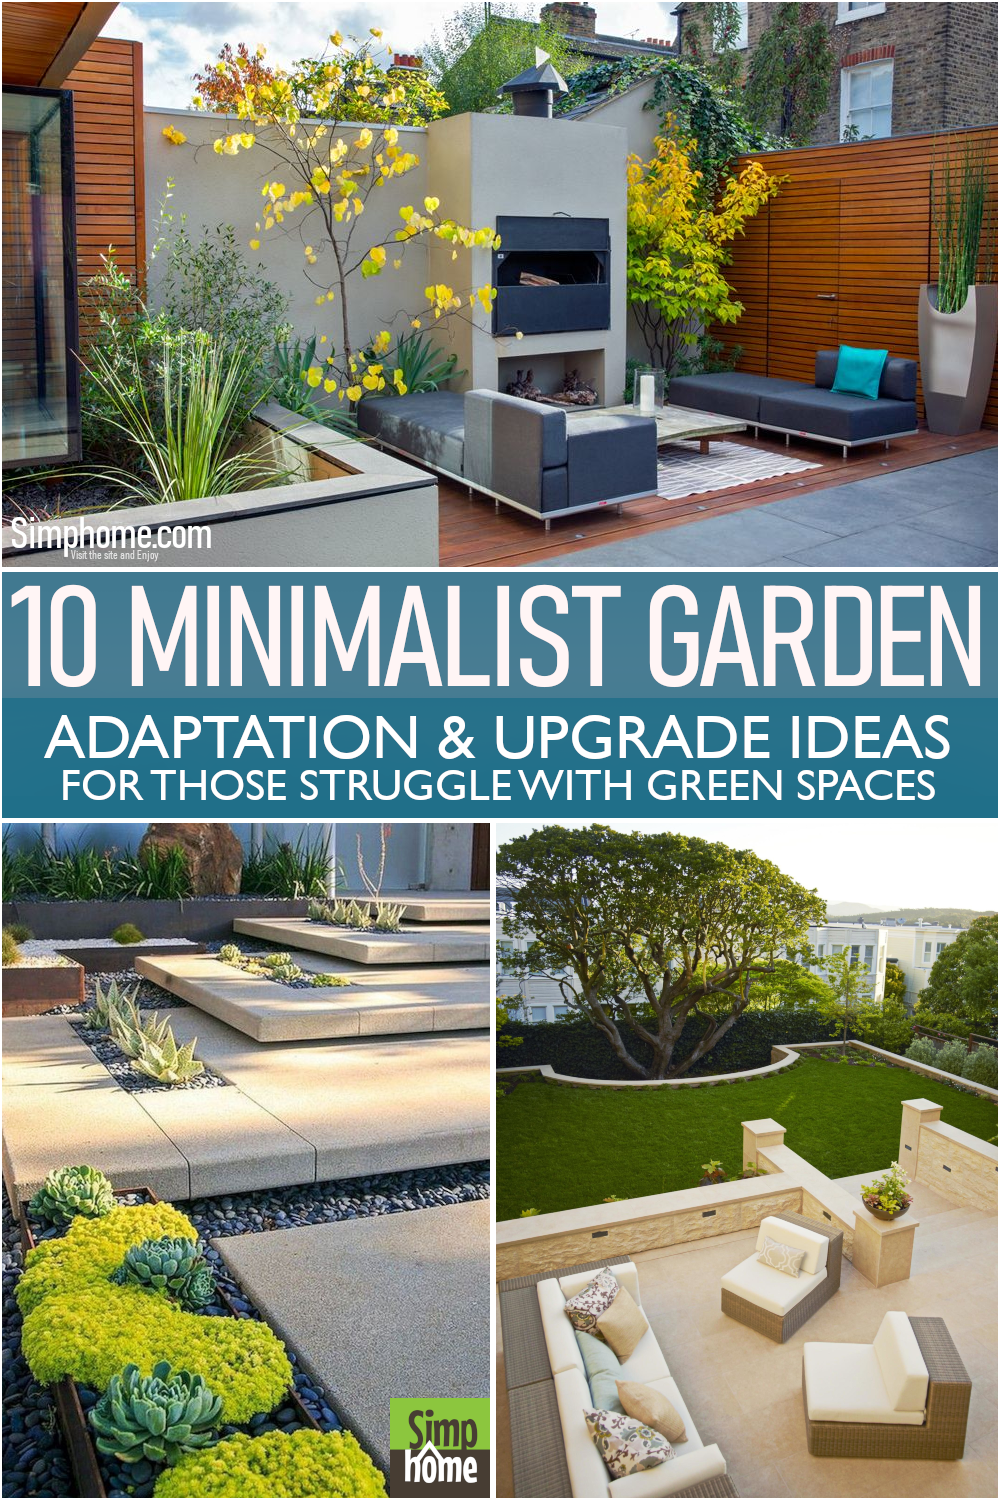 Take the Minimalist Garden Ideas